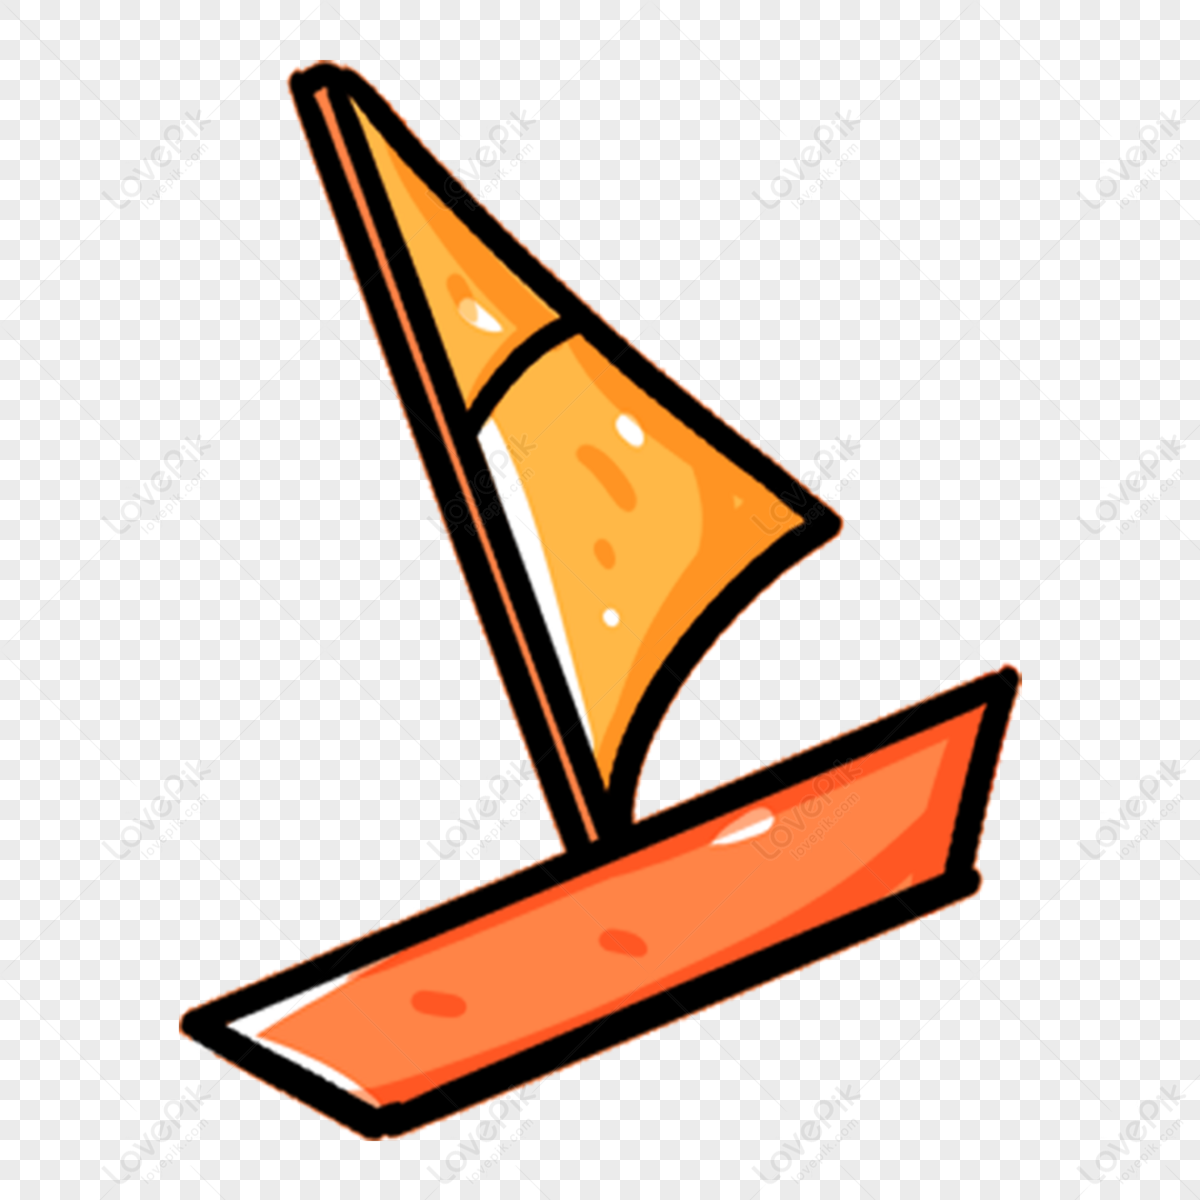 Orange hand drawn cartoon sailboat,black and white,travel,line draft png image